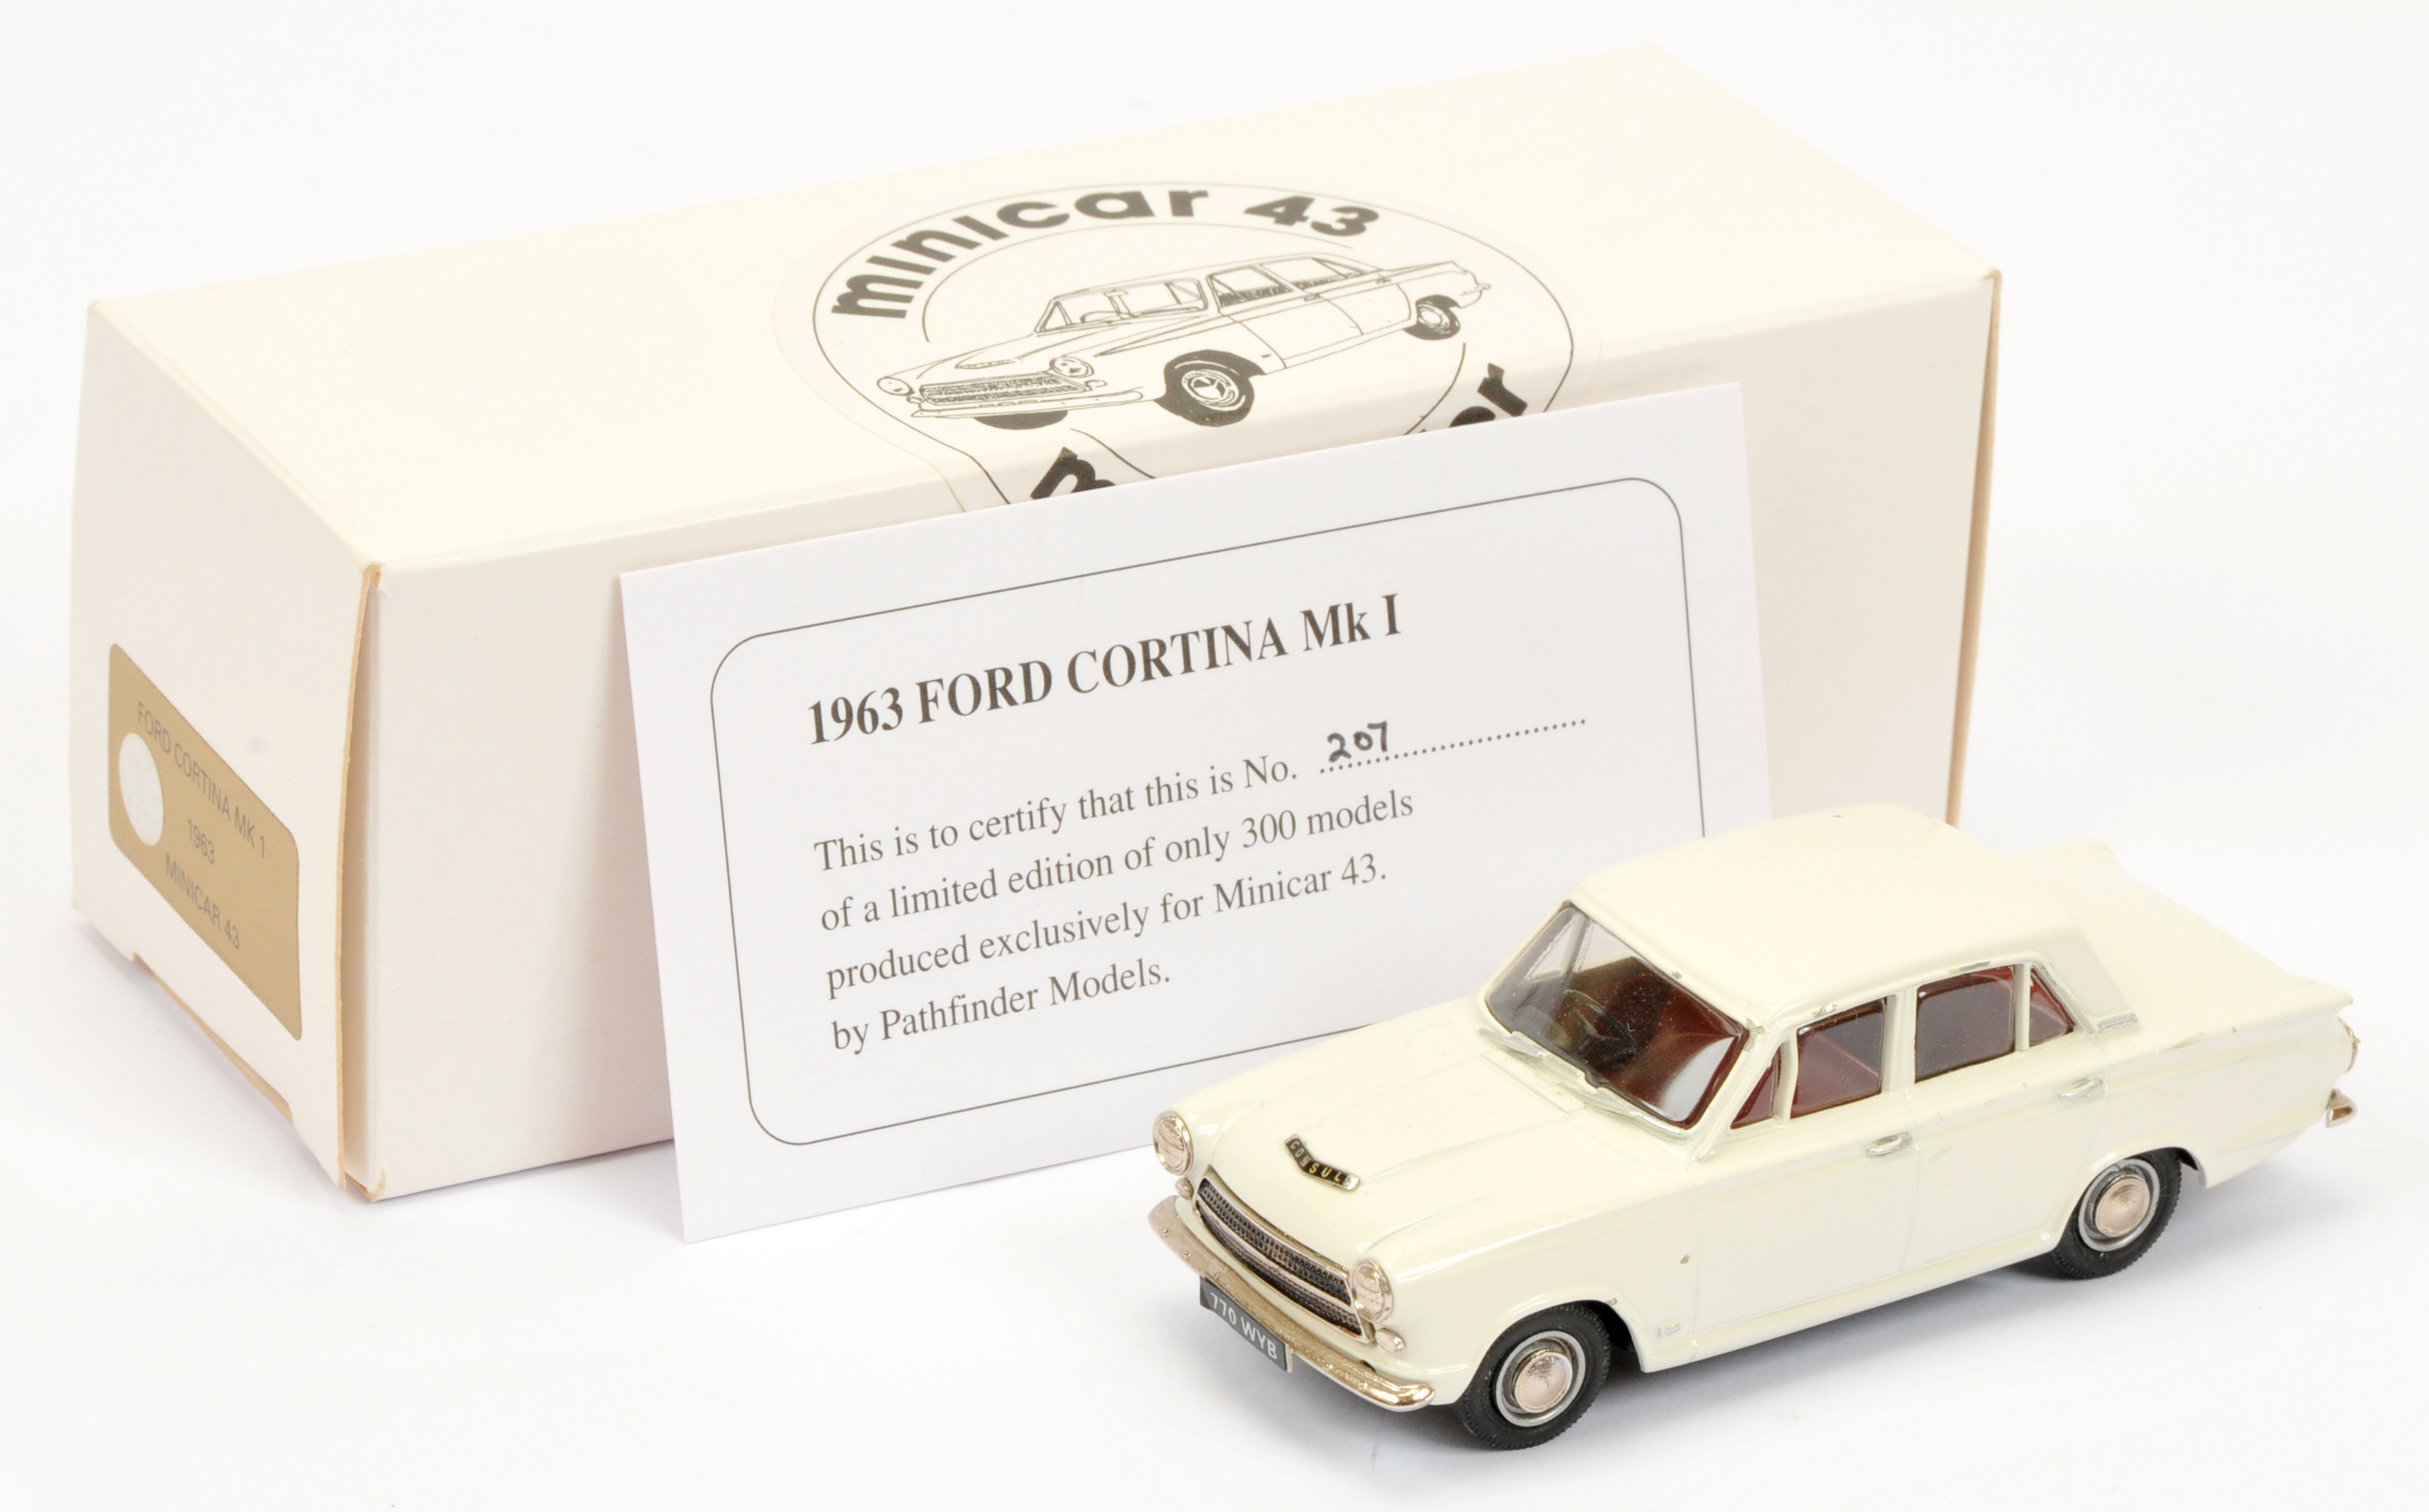 Pathfinder Models (Minicar 43) Ford Cortina Mk.1 1963 -